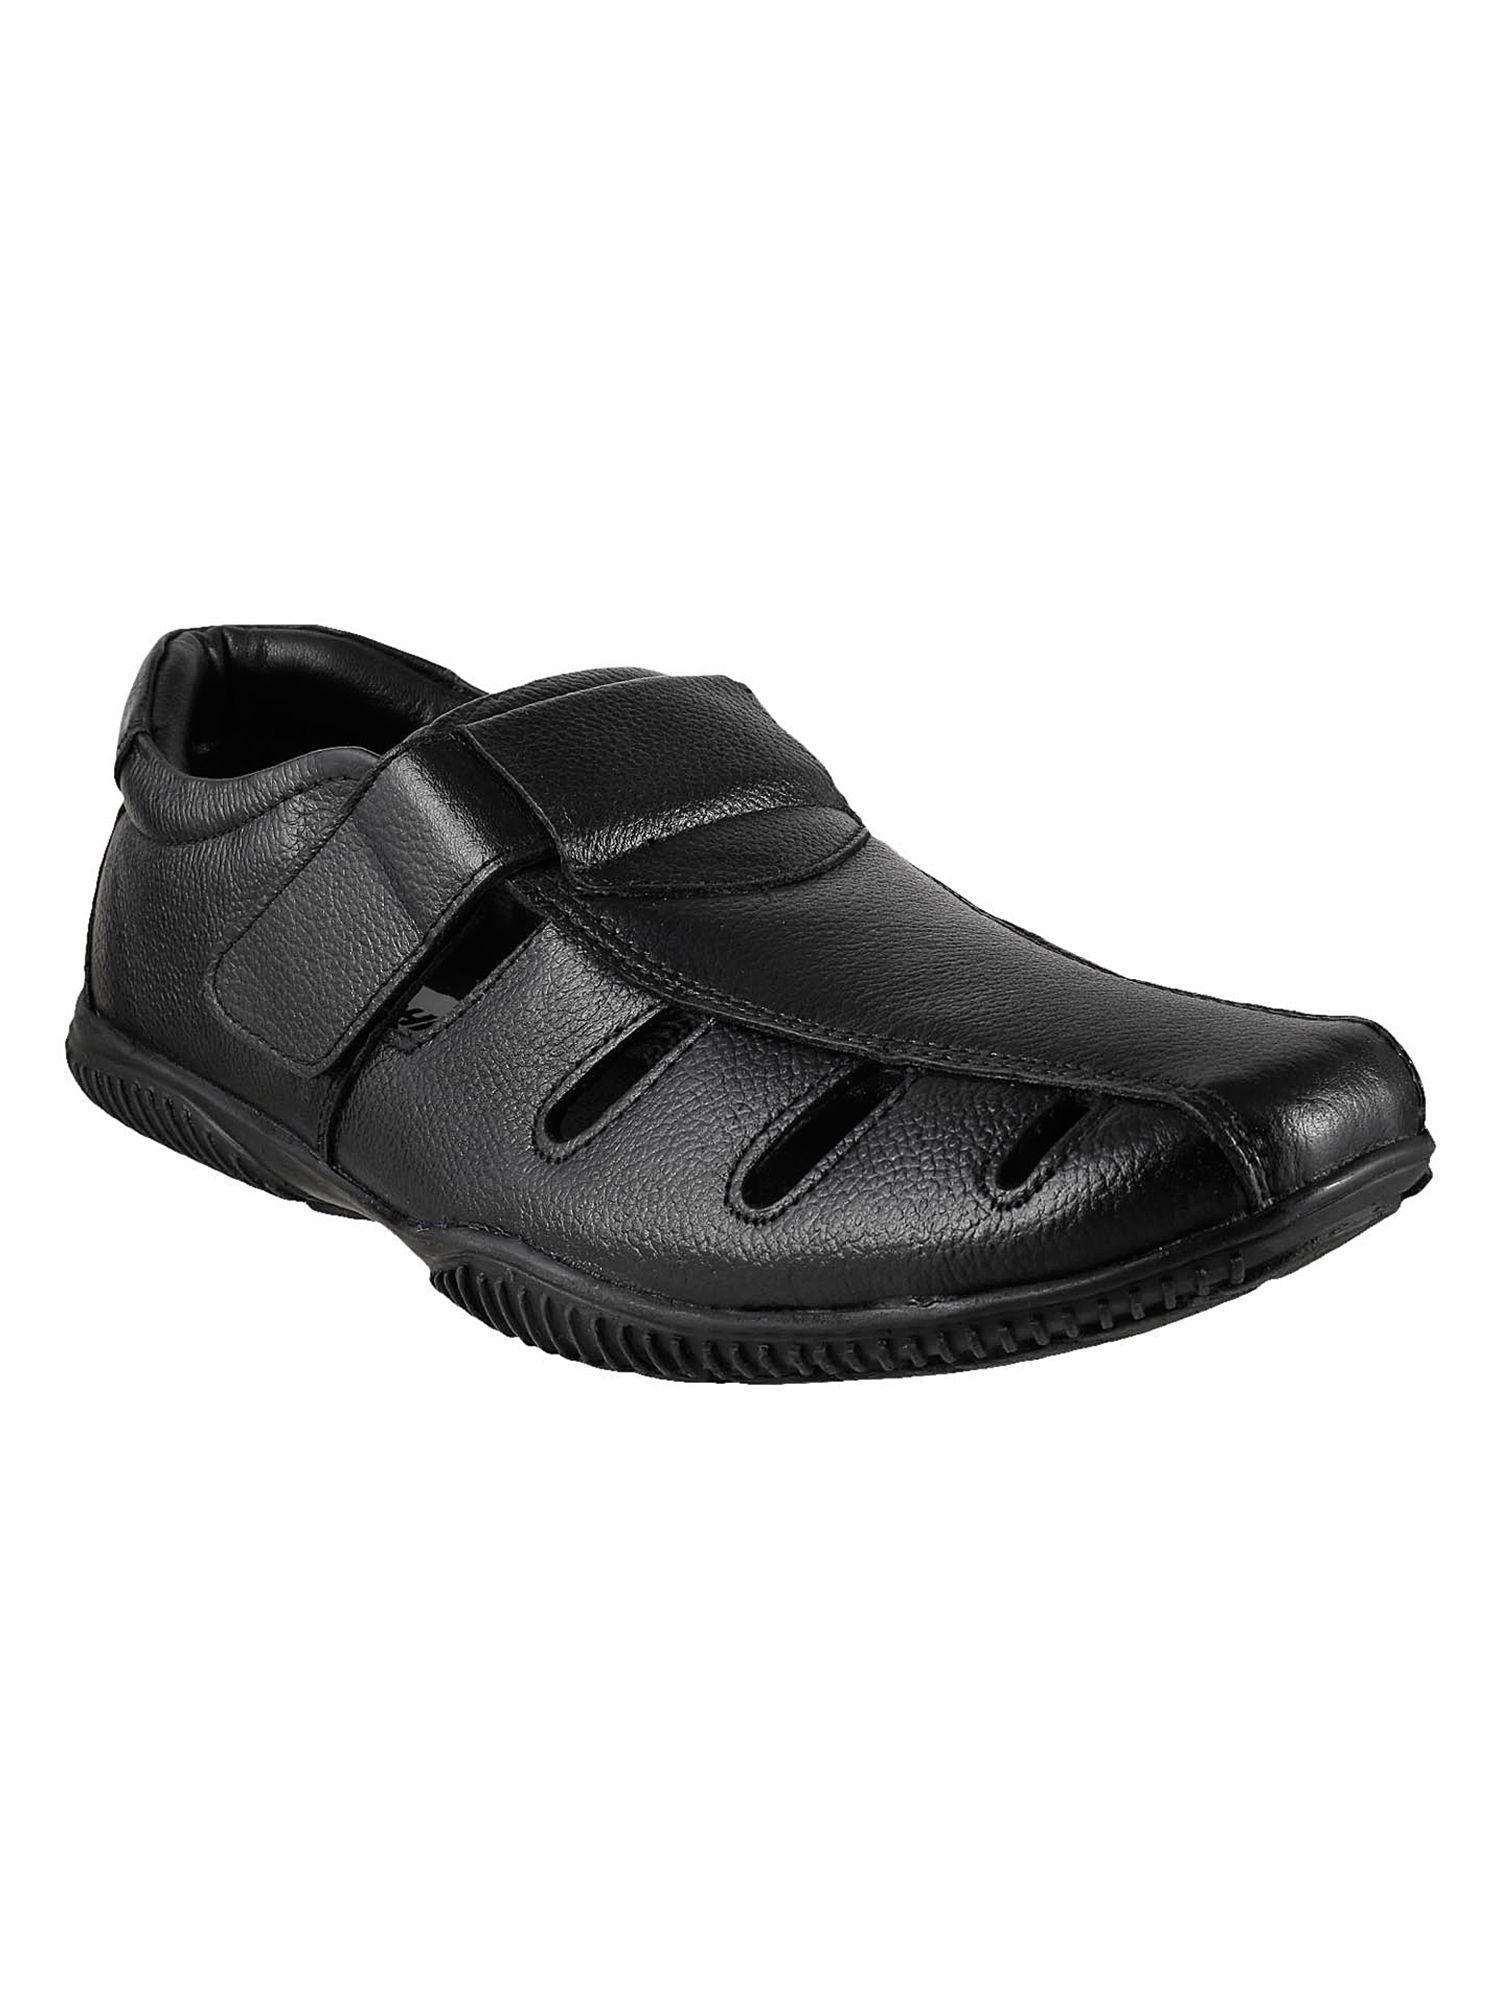 mens-black-casual-sandalsmochi-black-solid-sandals